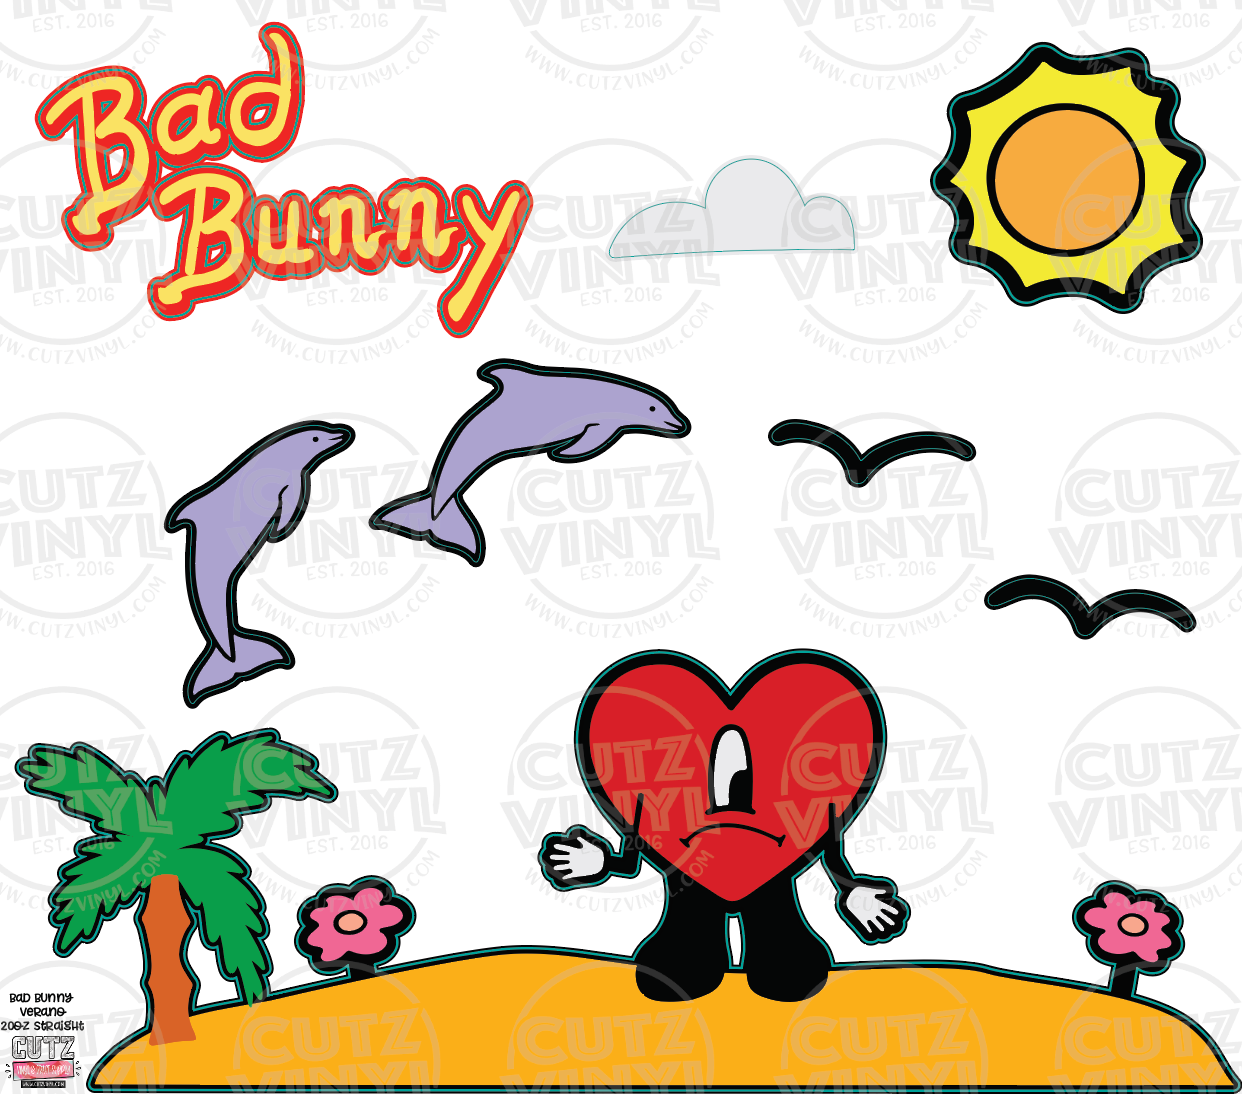 Bad Bunny Verano